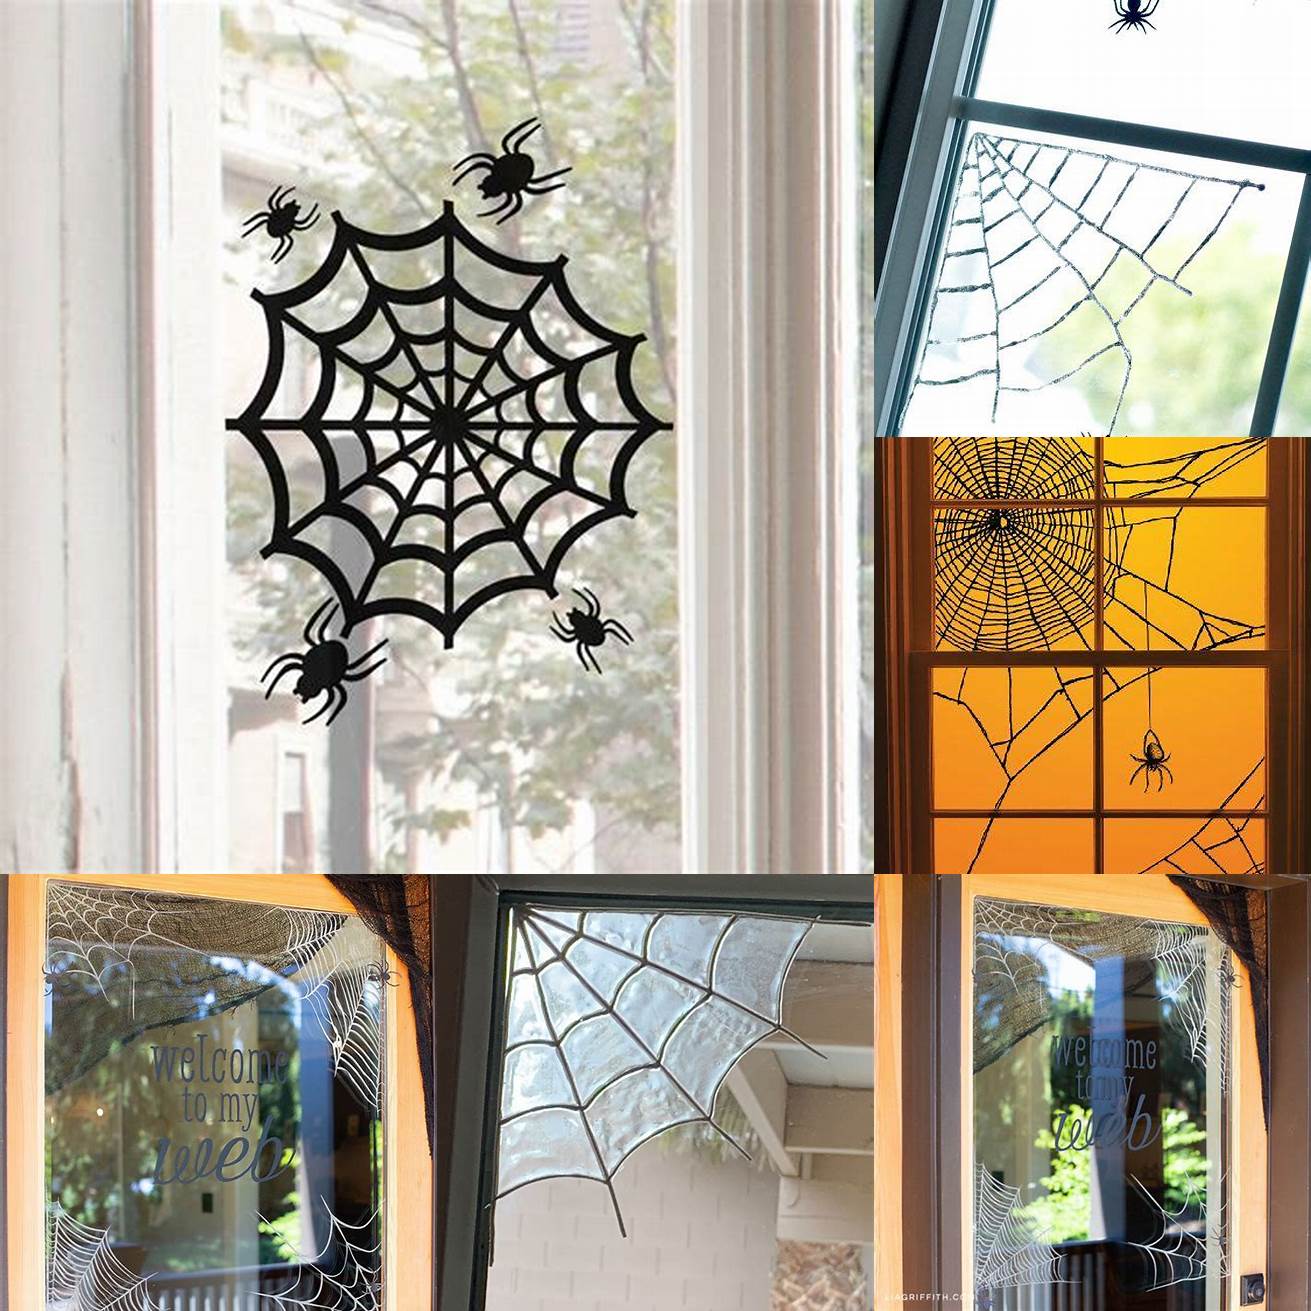 Spiderweb window clings